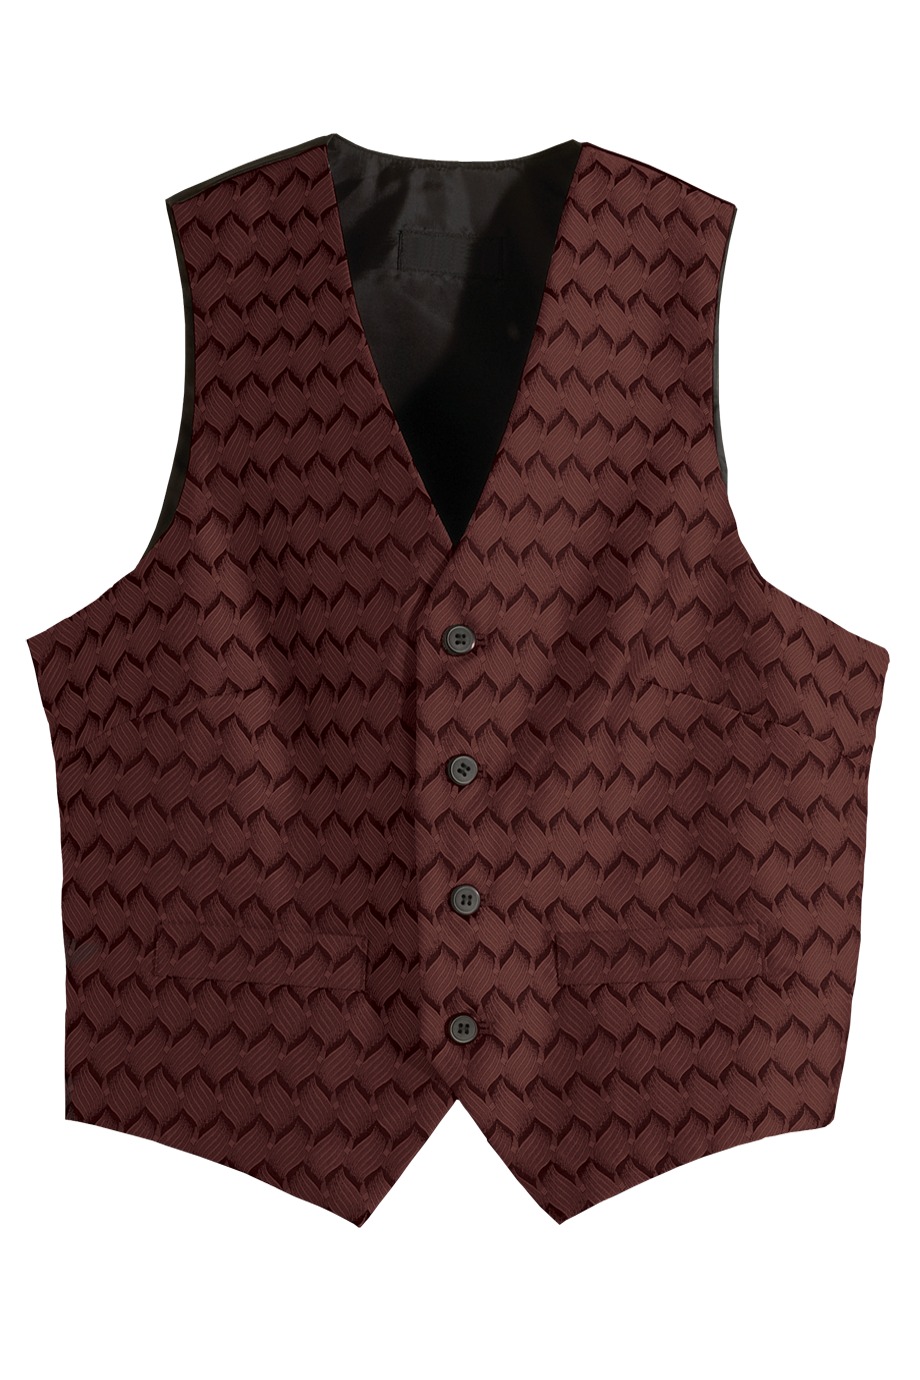 Edwards Garment 4391 - Men's Swirl Brocade Vest